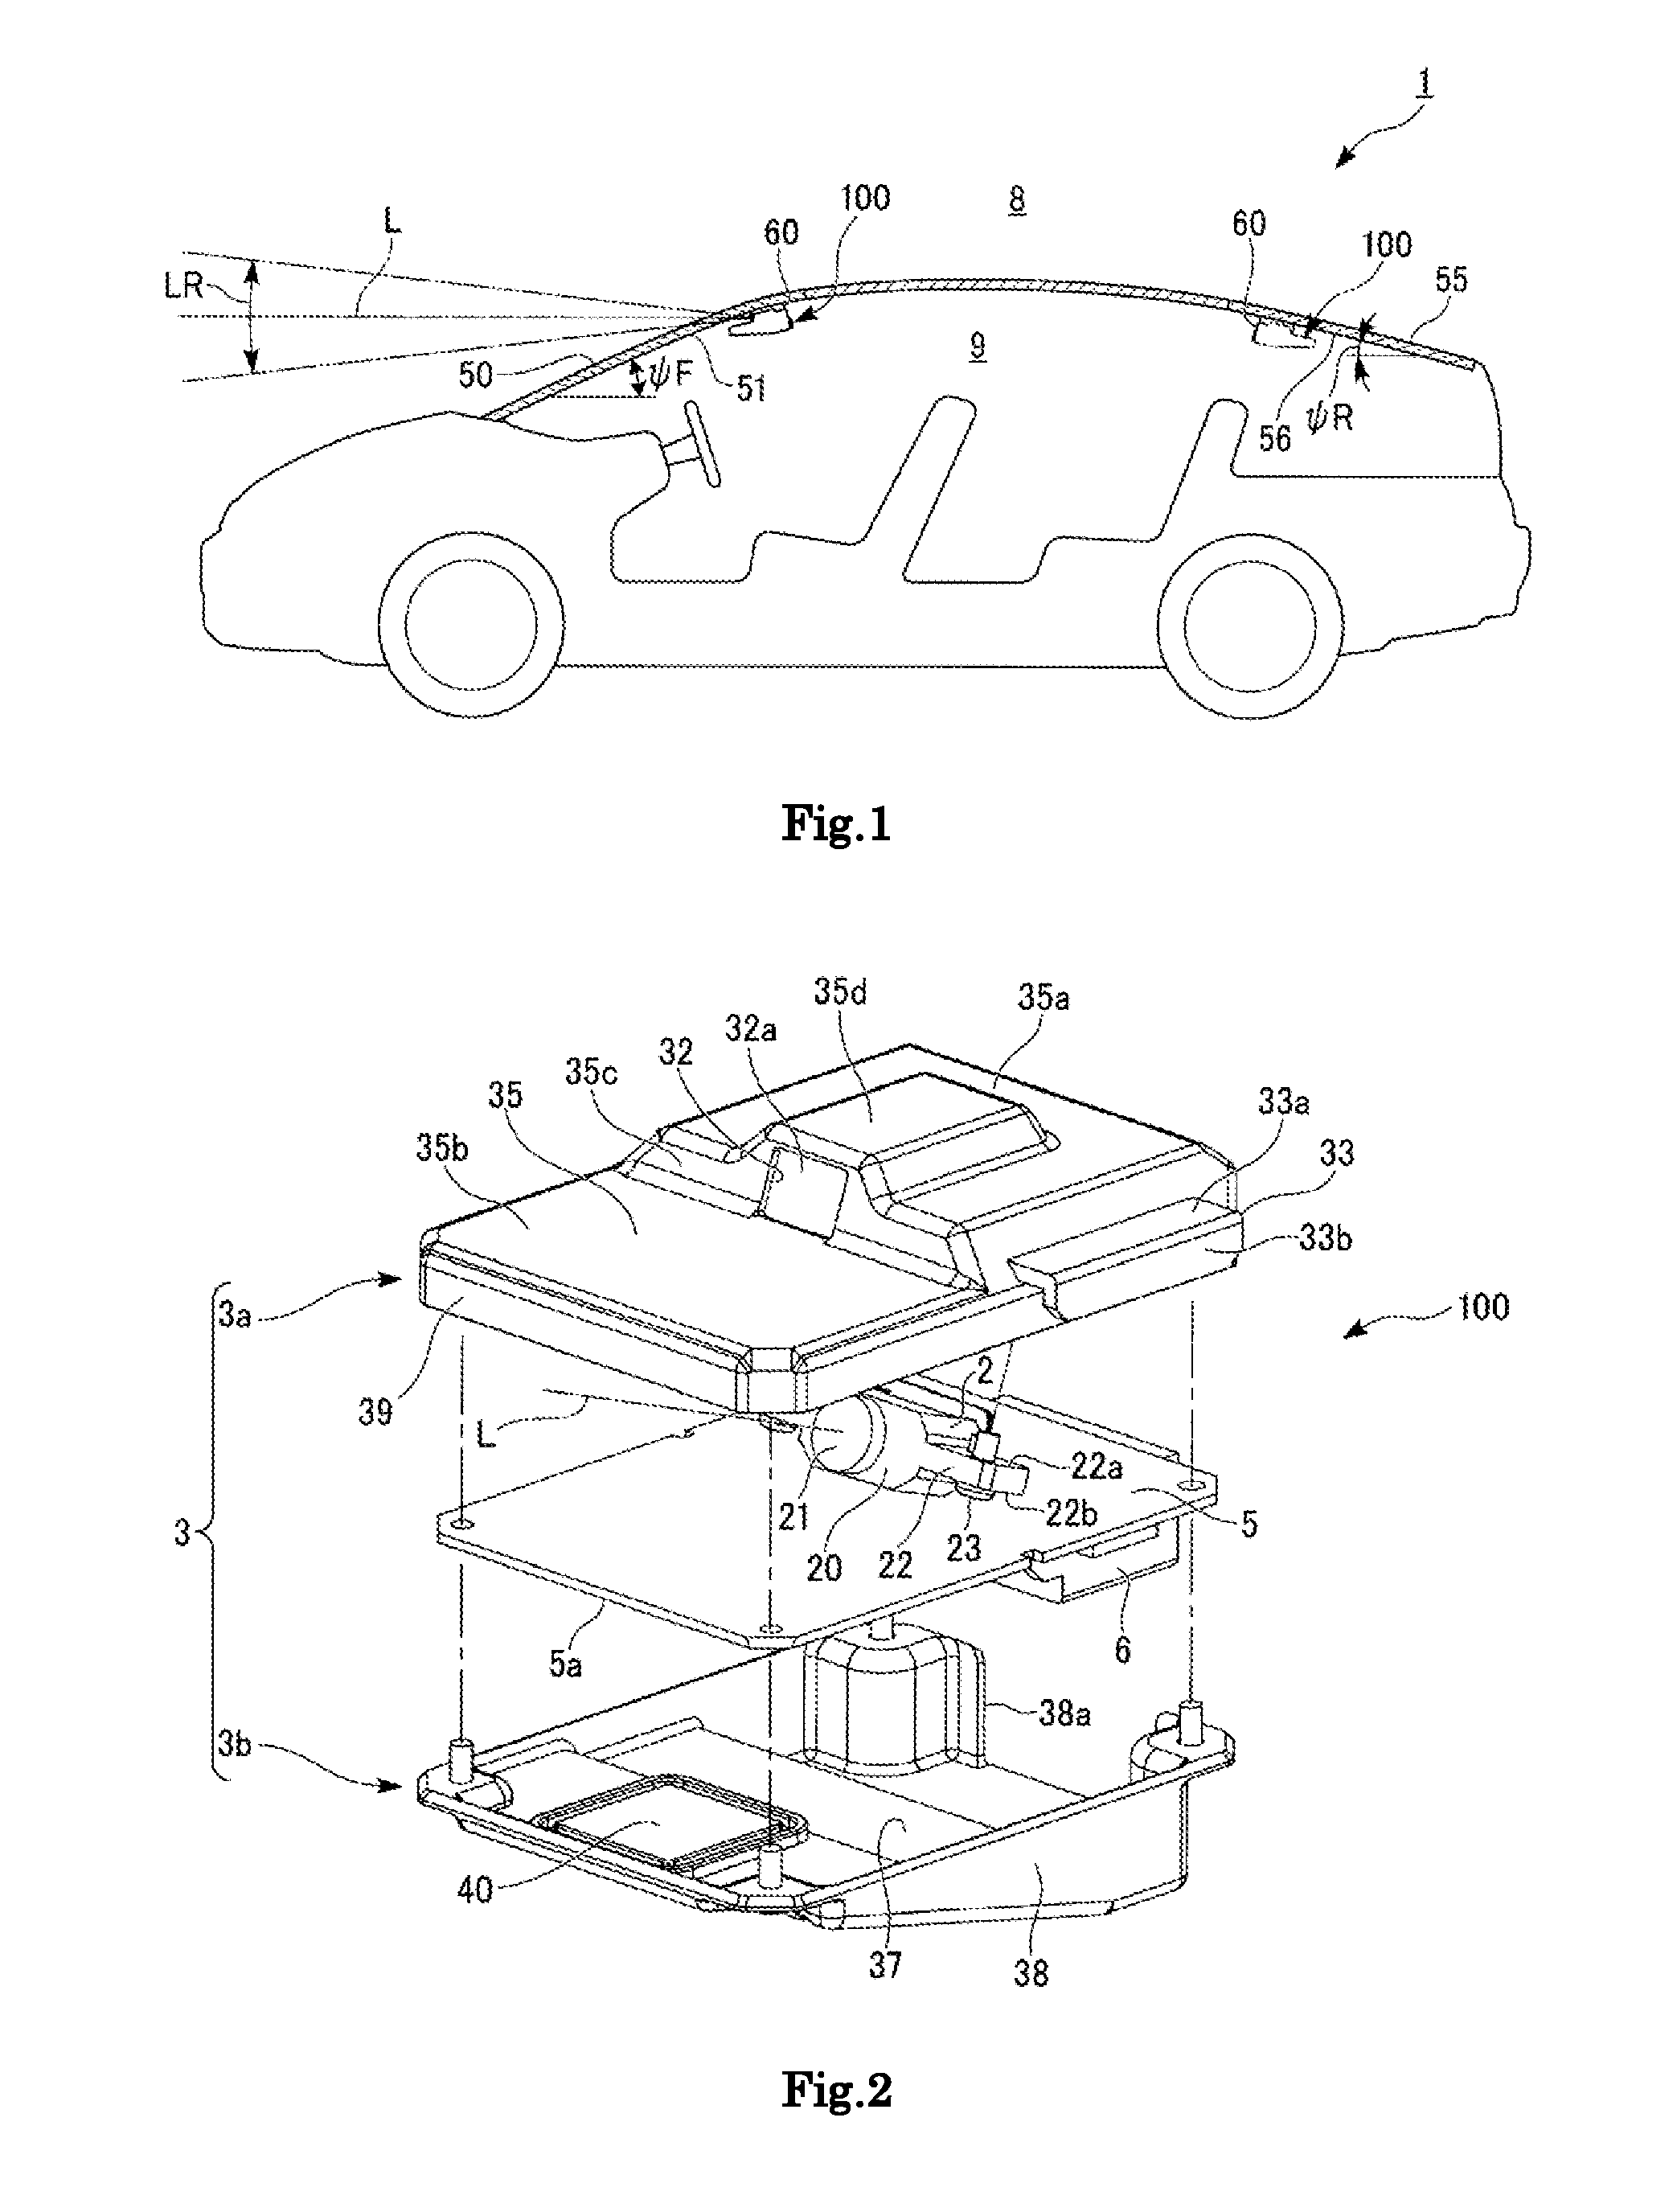 Method of manufacturing vehicle